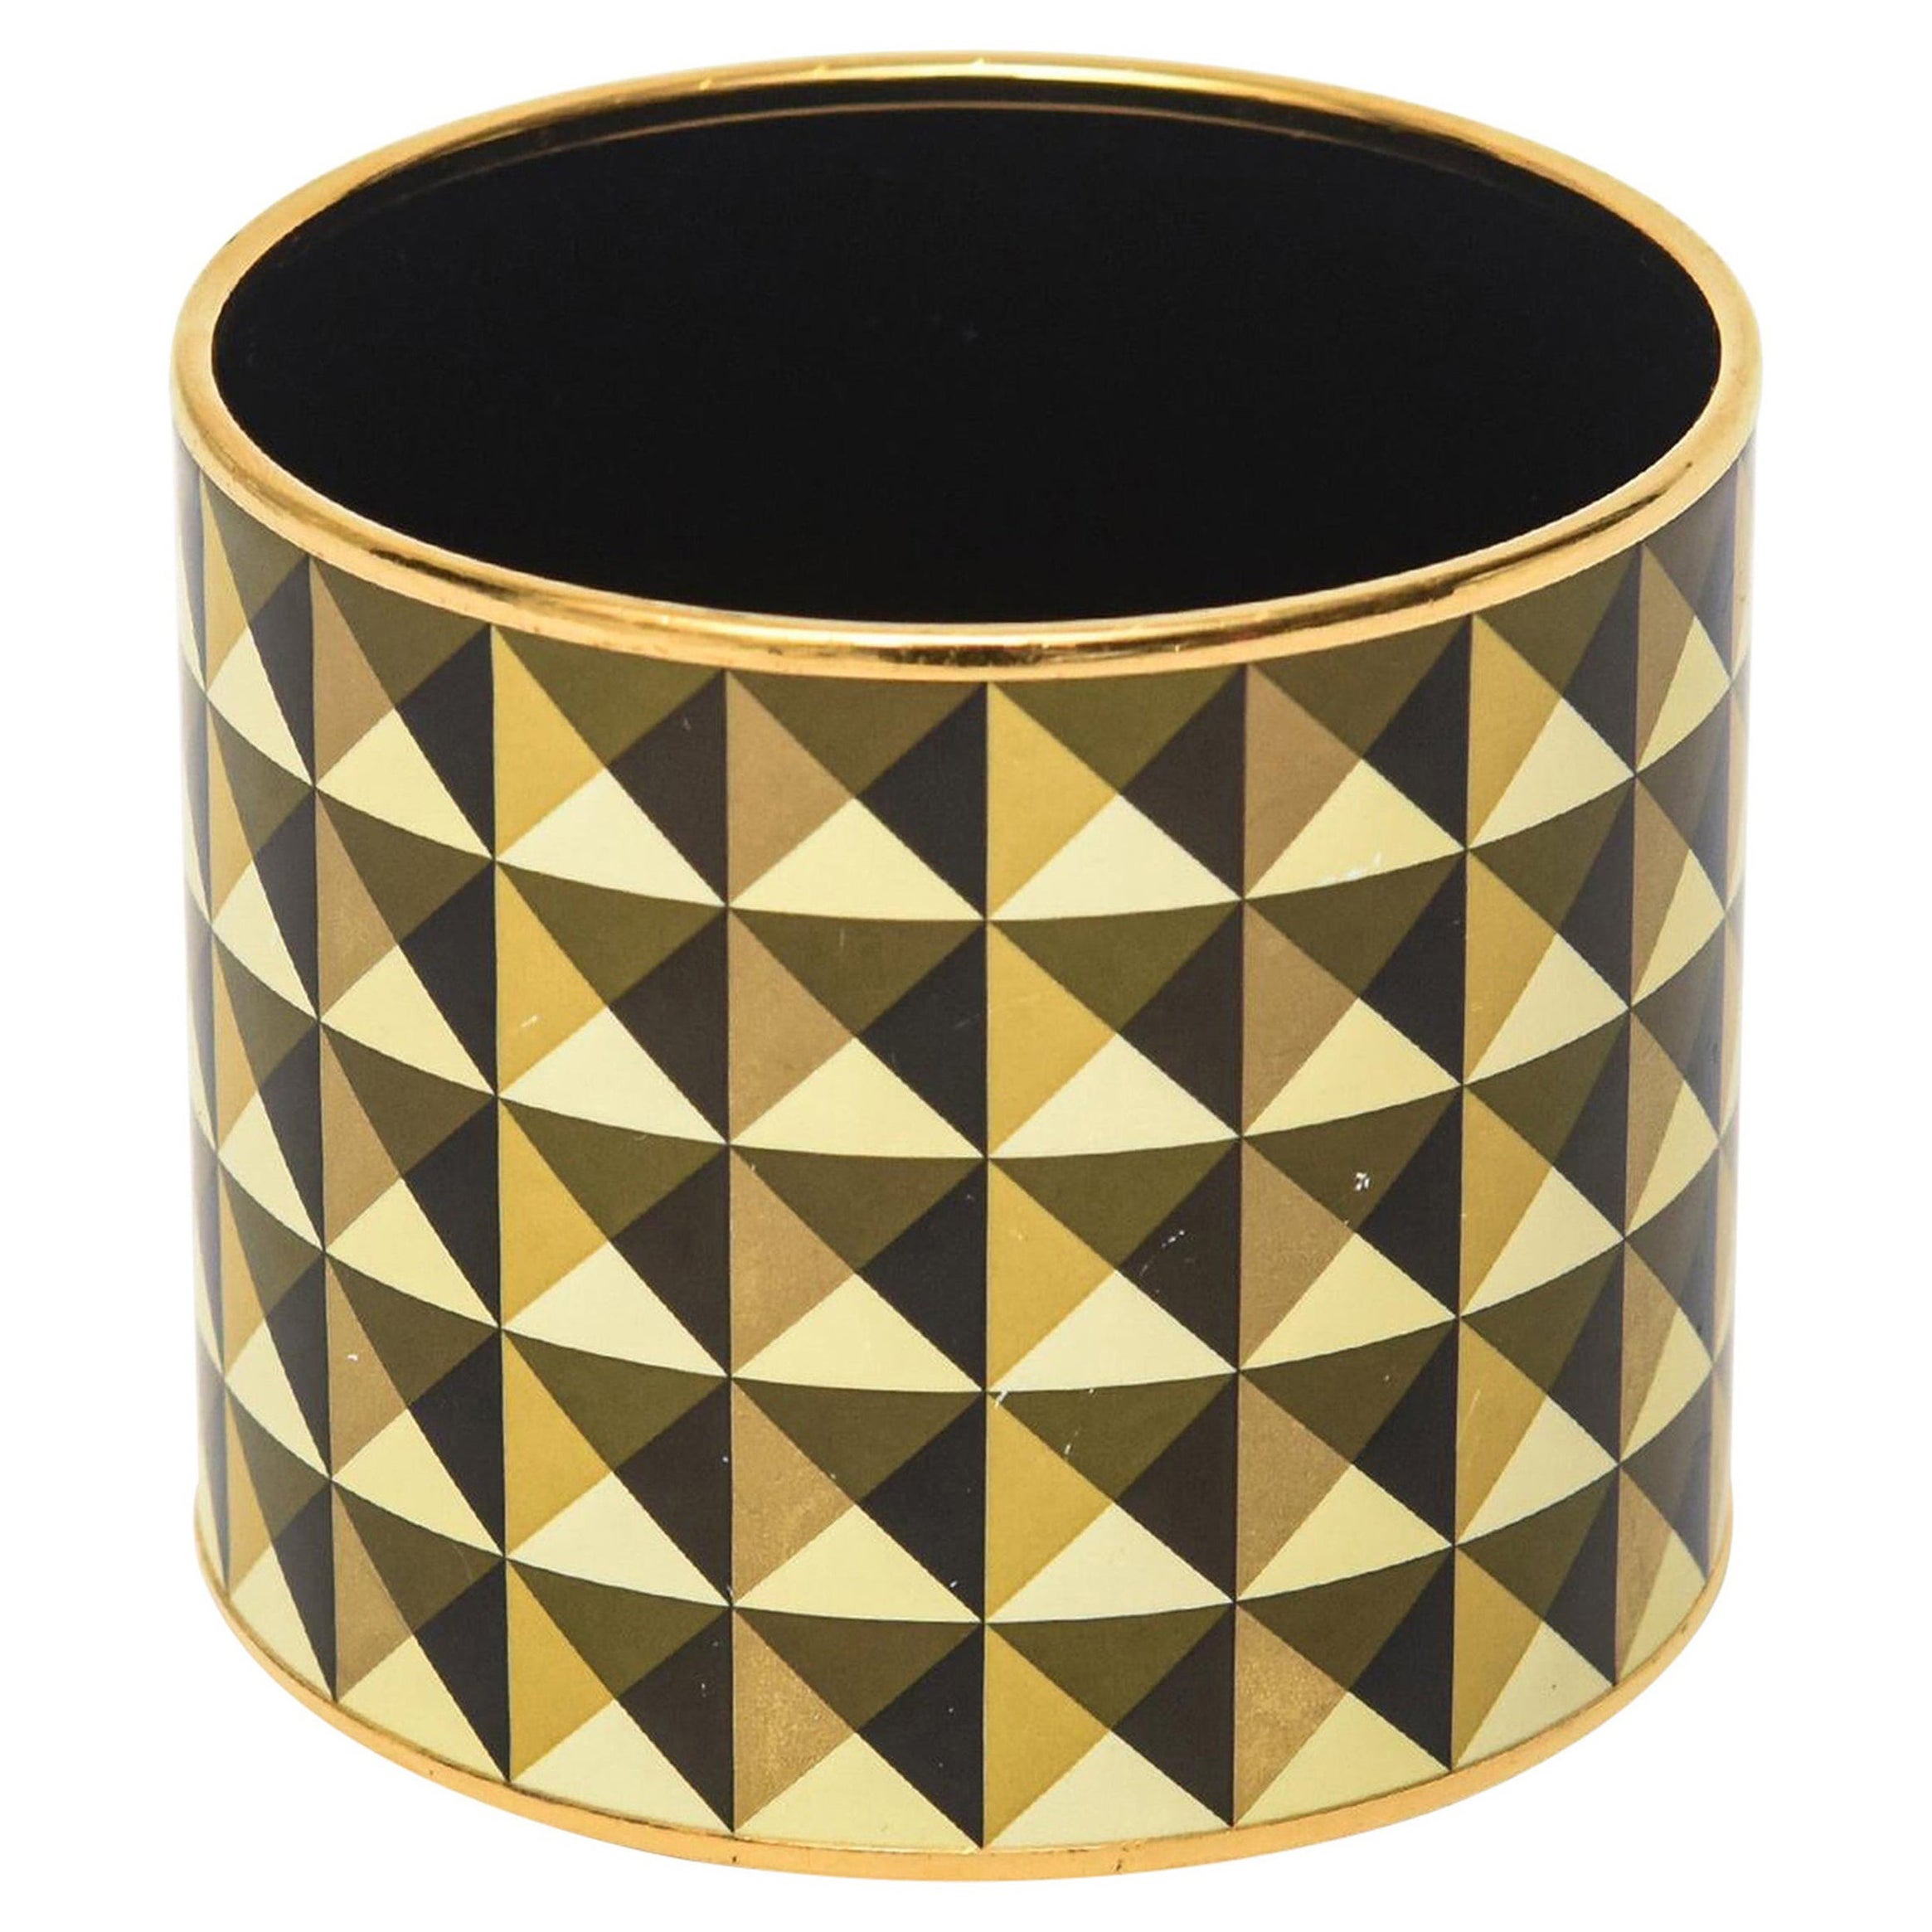 Hermes Wide Cuff Geometric Sculptural Black, Yellow, Gold Enameled Bracelet